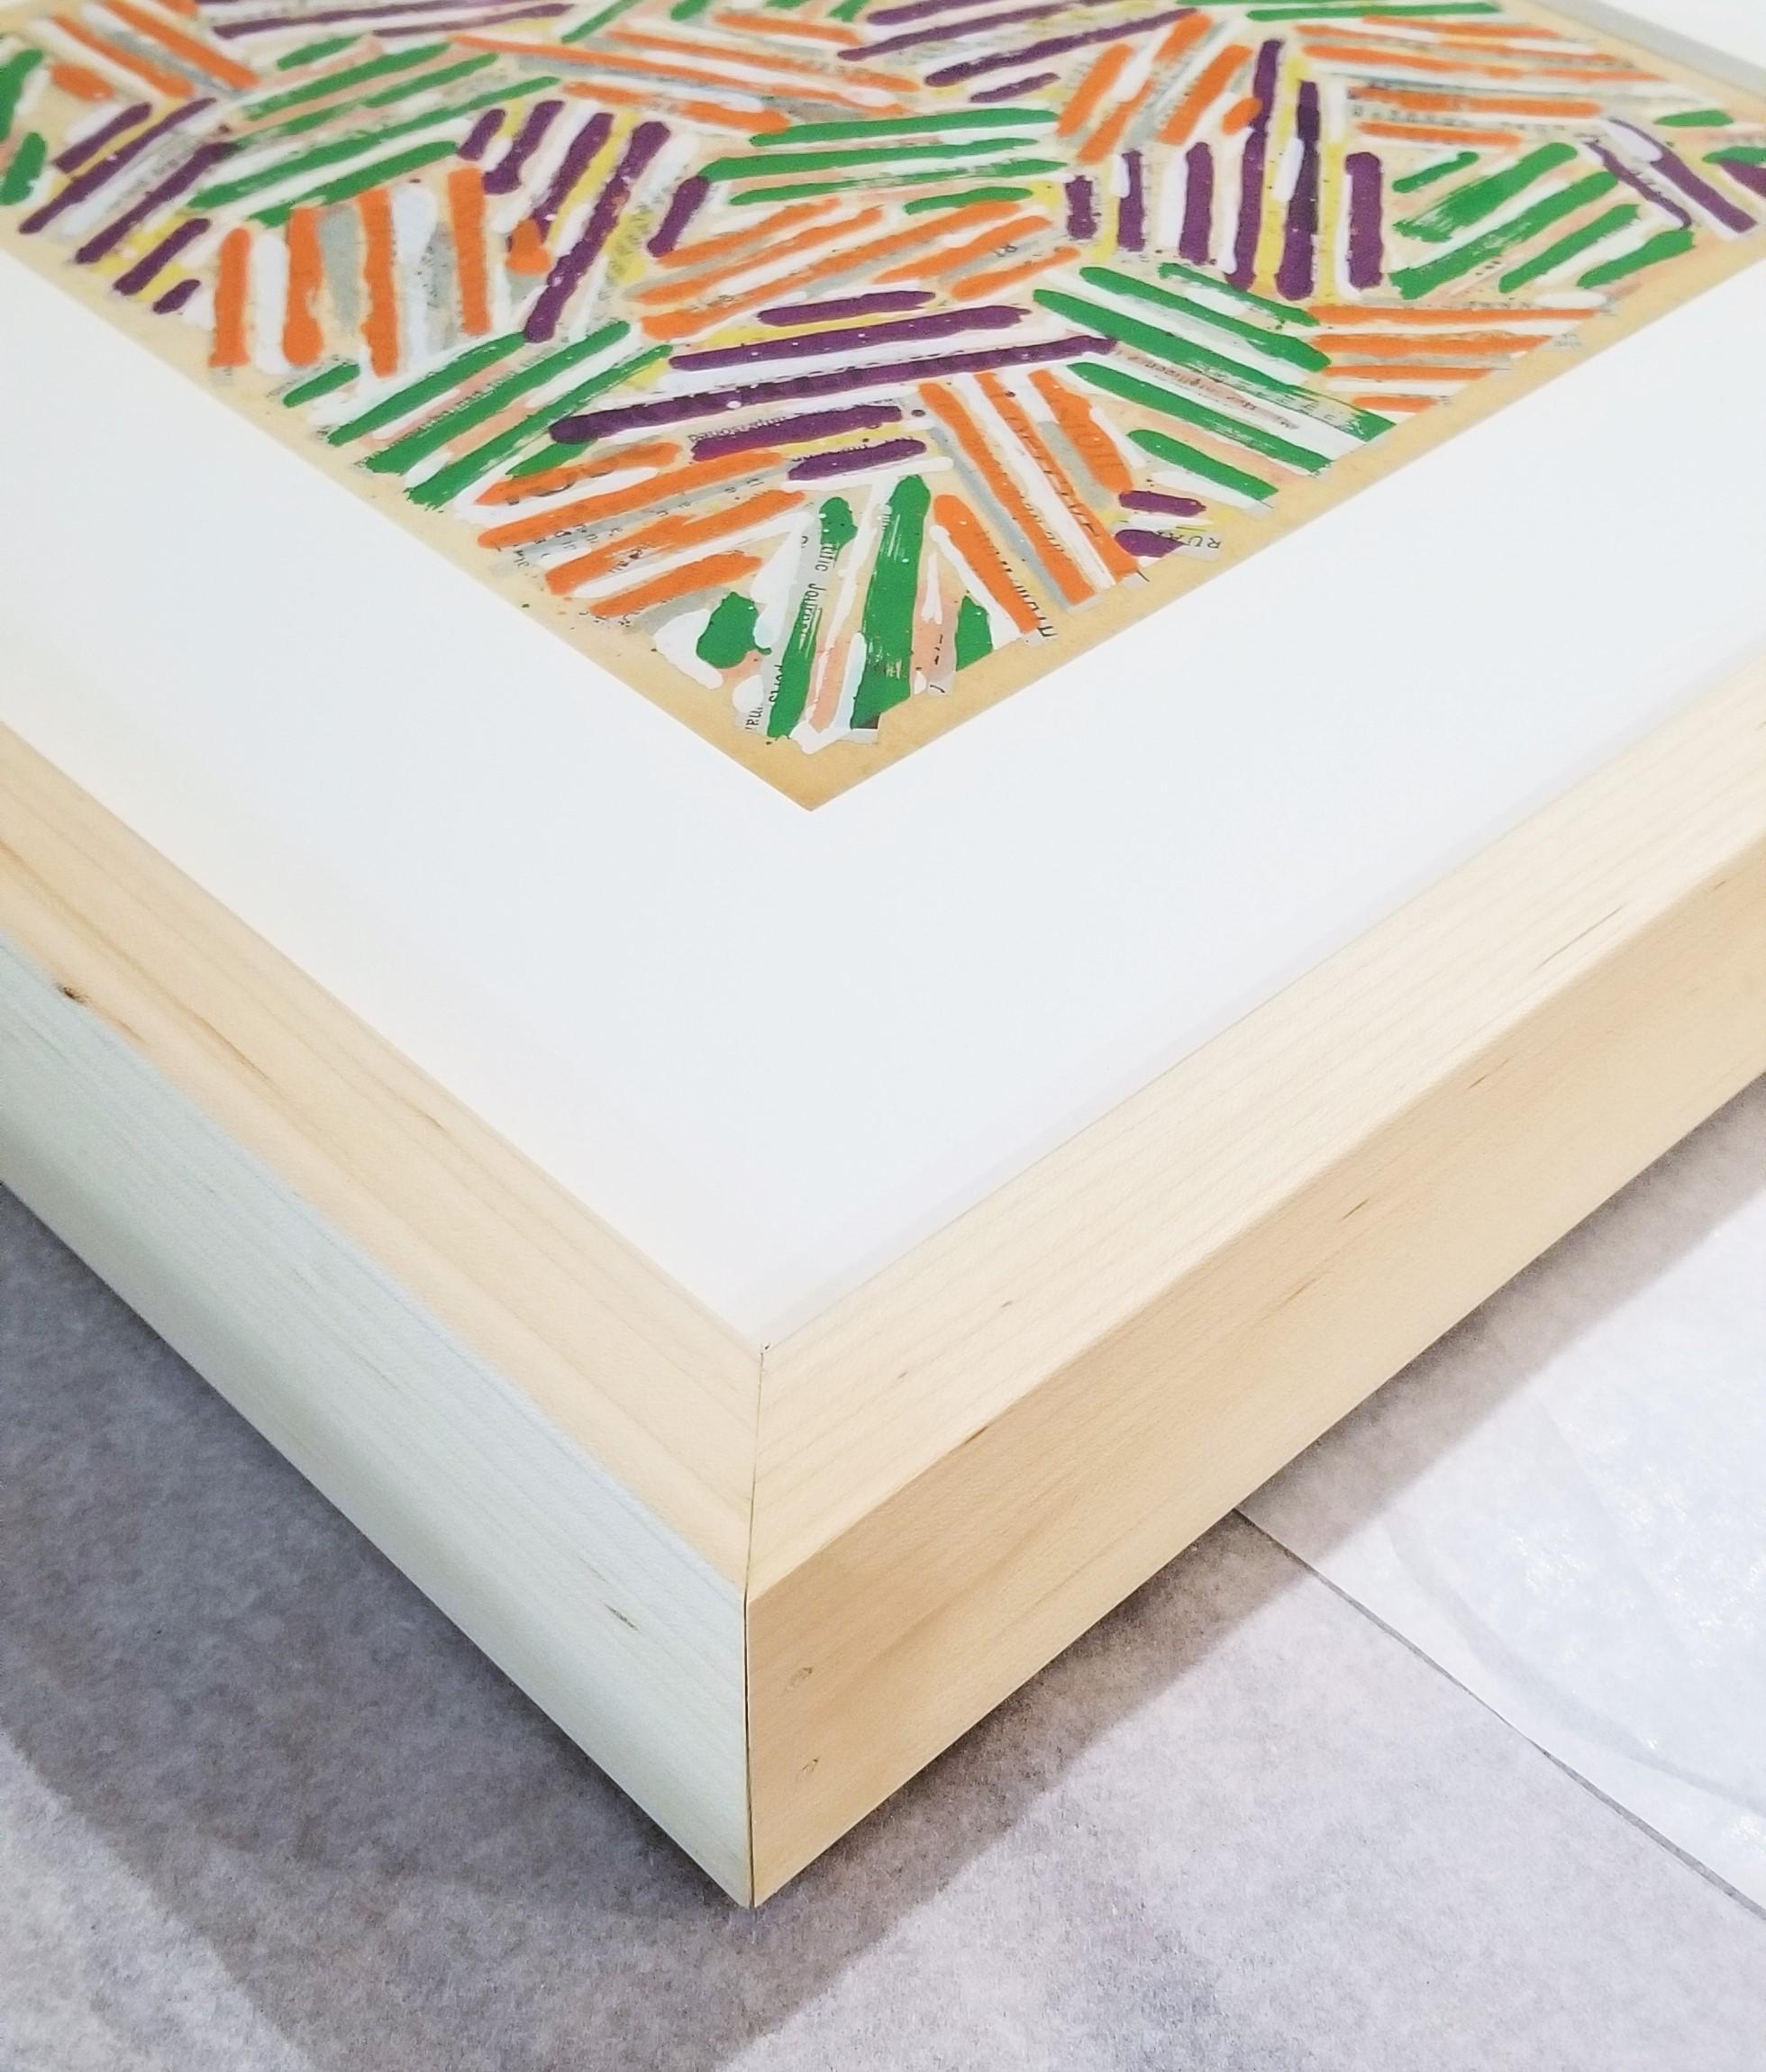 Untitled (Cross Hatch) /// Abstract Geometric Jasper Johns Minimal Screenprint For Sale 14